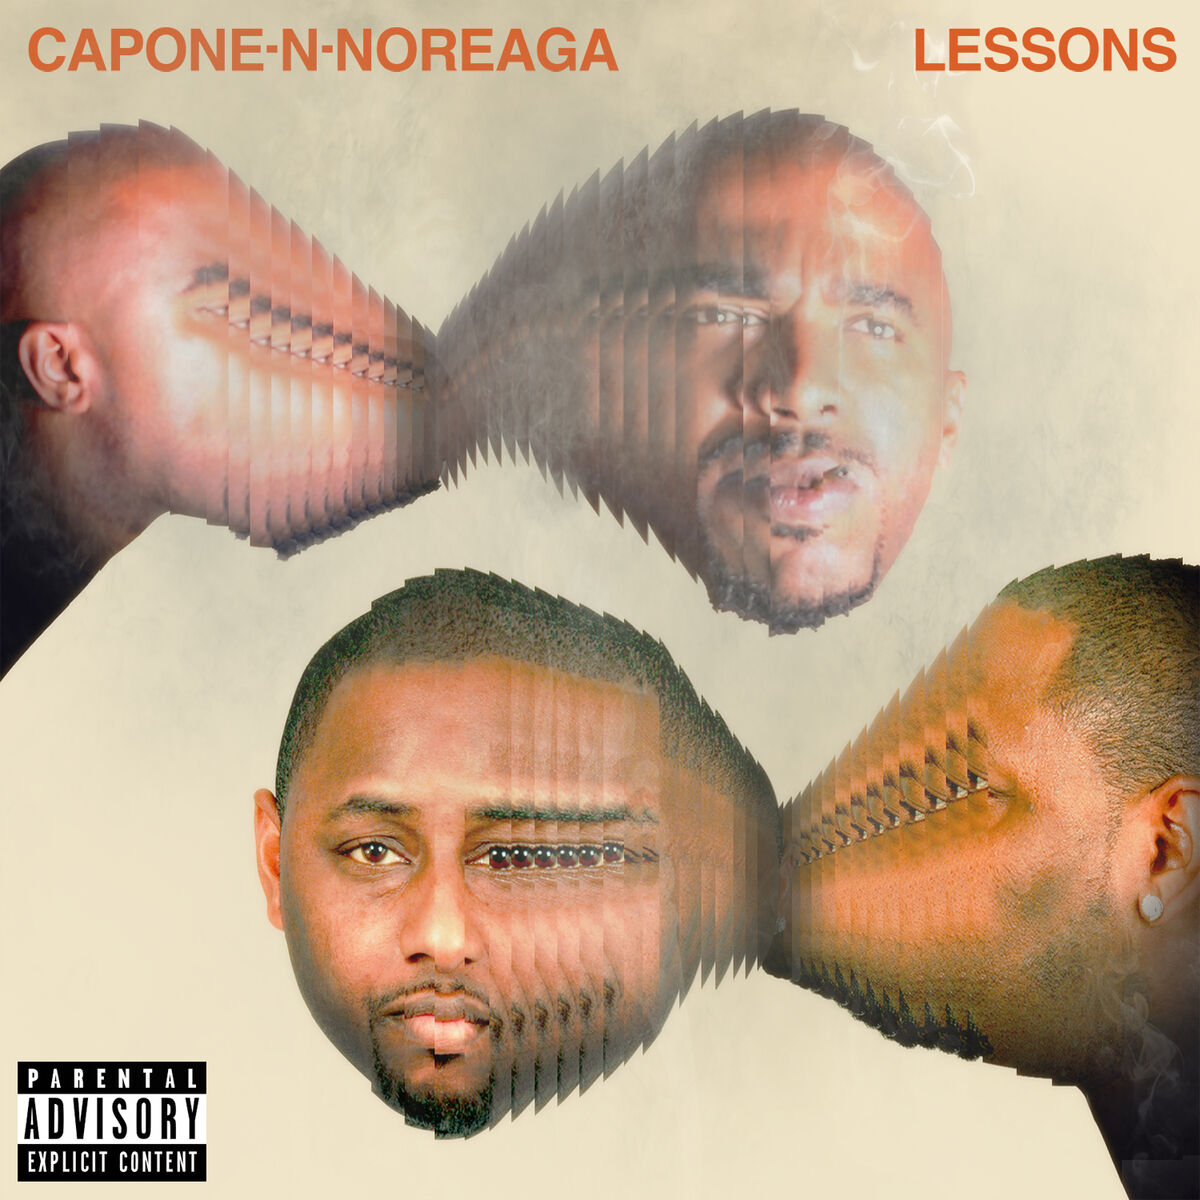 Capone-N-Noreaga: albums, songs, playlists | Listen on Deezer